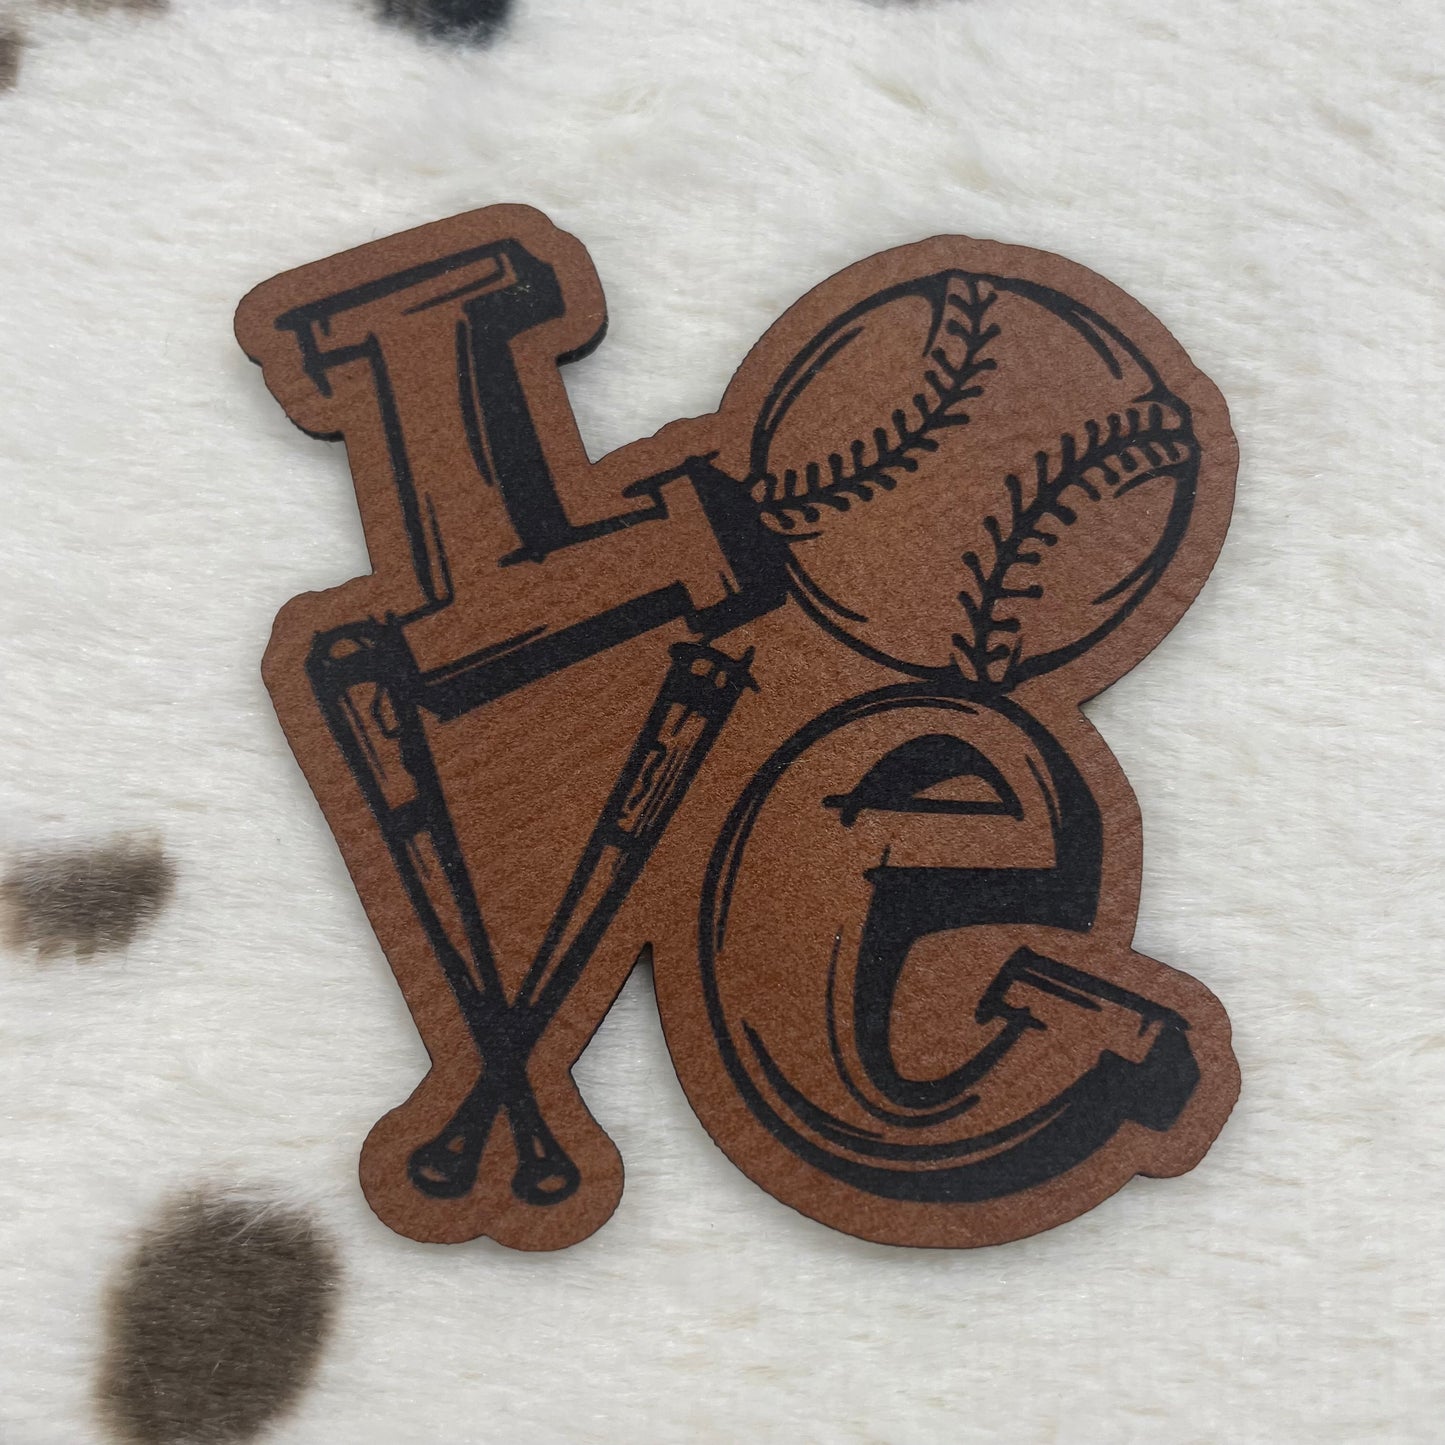 Love Baseball/Softball- 2.5" wide x 2.75" tall Leatherette Patch